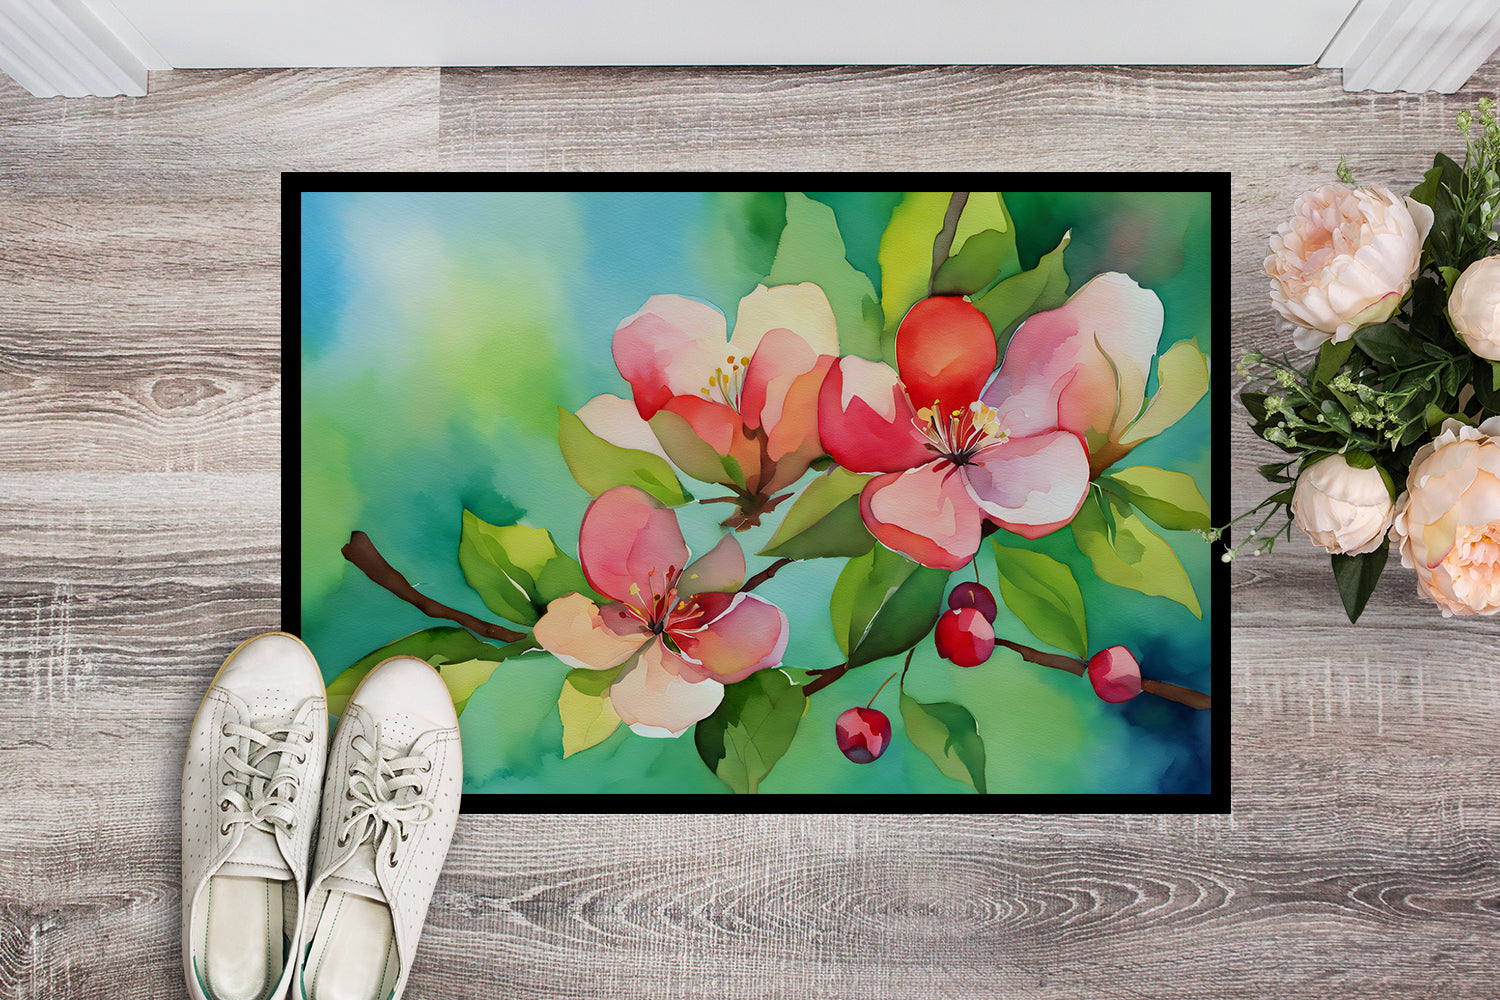 Buy this Arkansas Apple Blossom in Watercolor Doormat 18x27